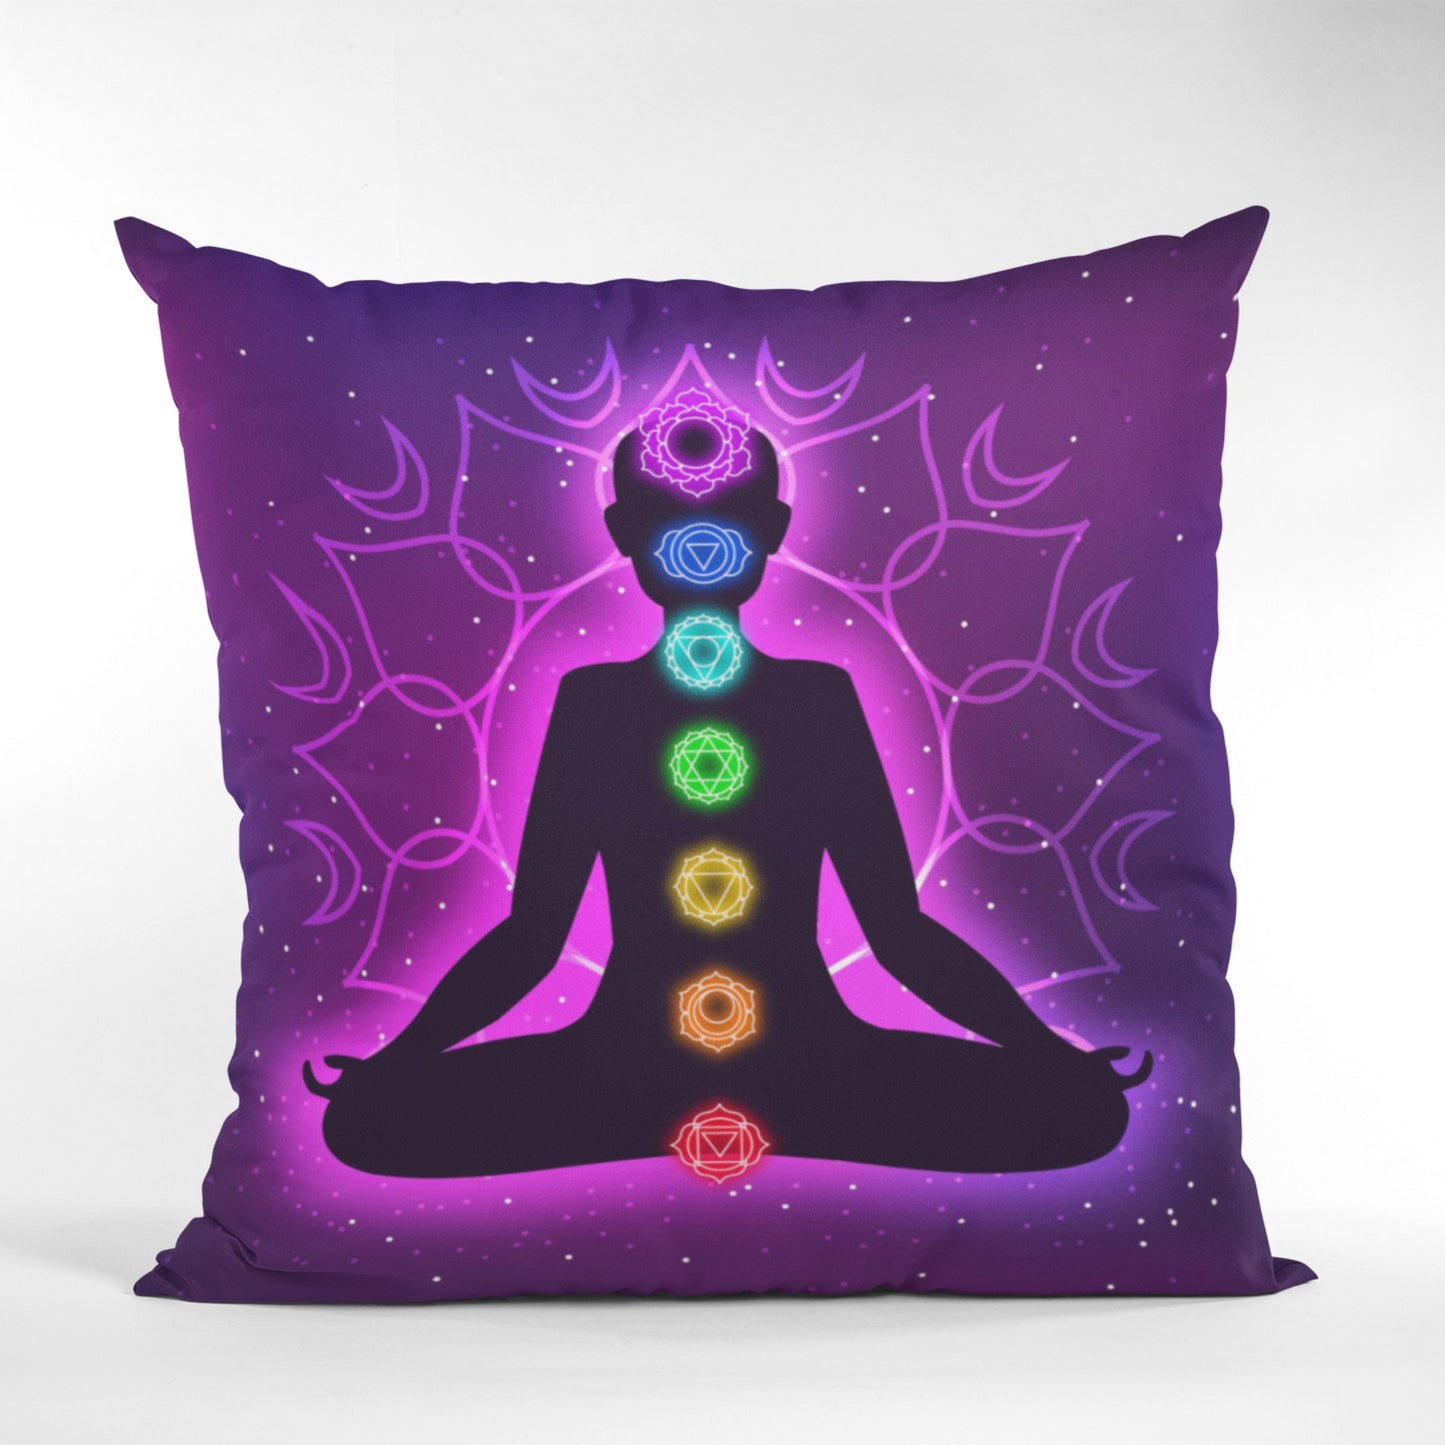 Spiritual Decorative Cushion Design